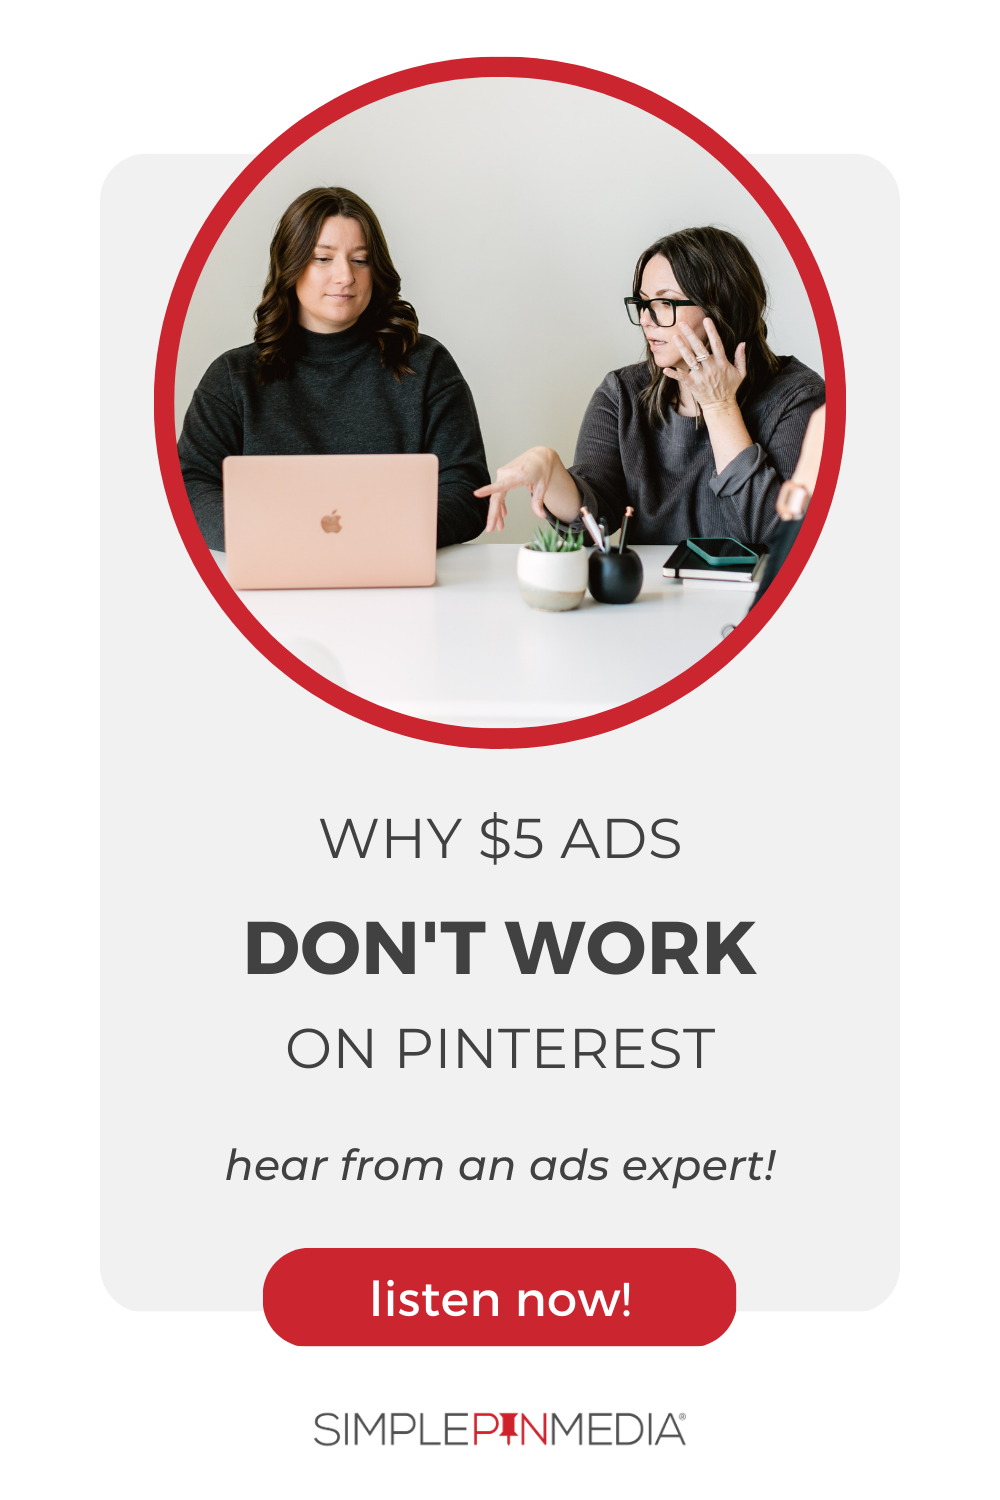 316 – Pinterest Ads Cost Best Practices